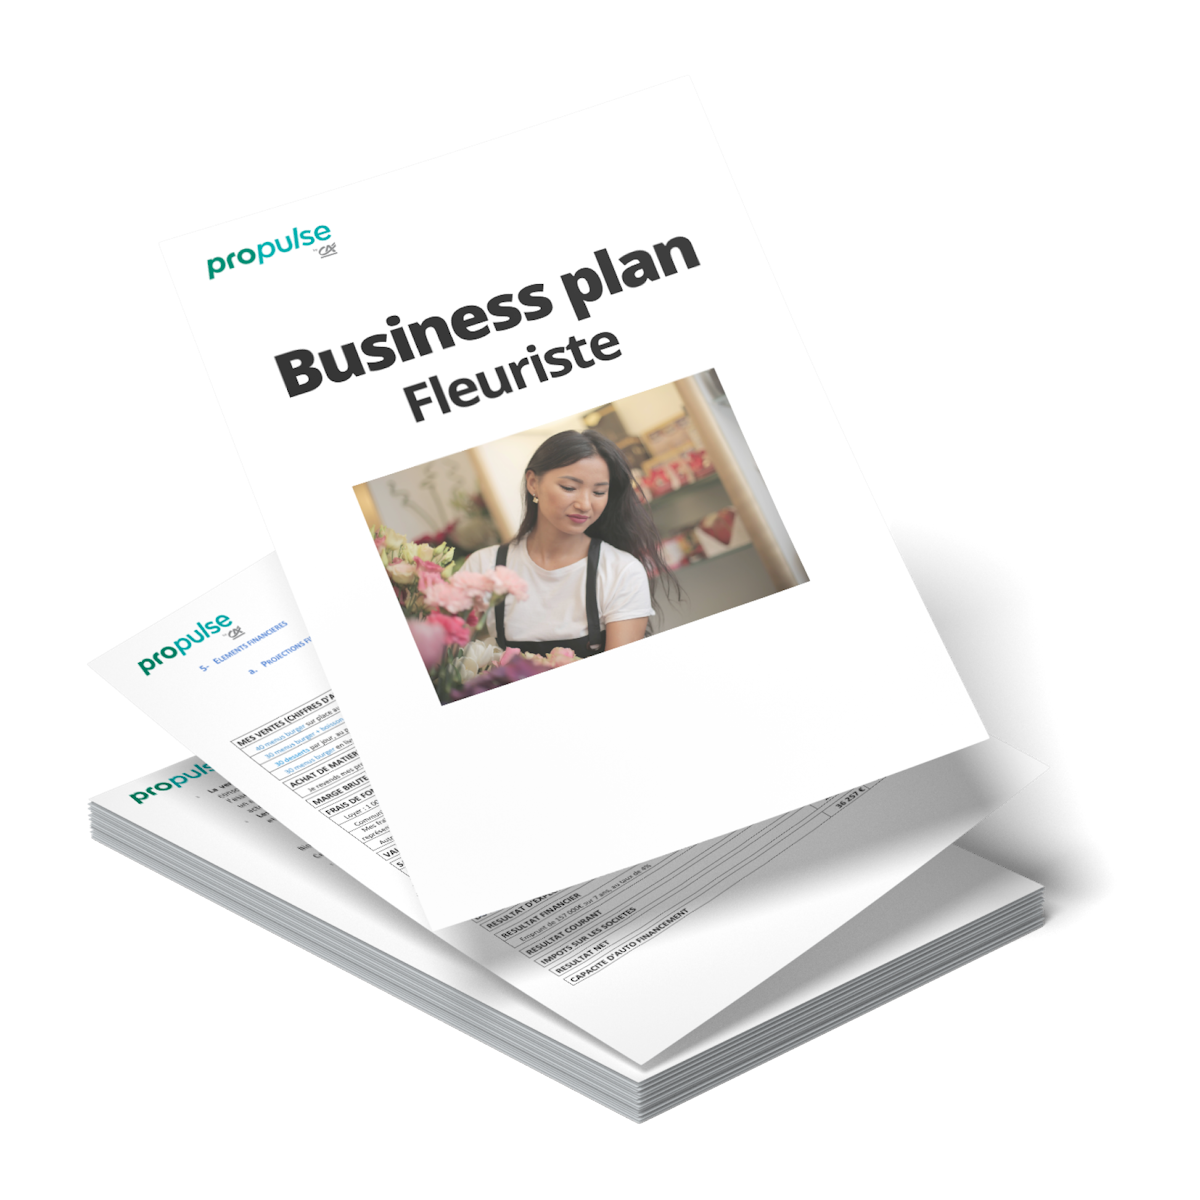 exemple business plan fleuriste